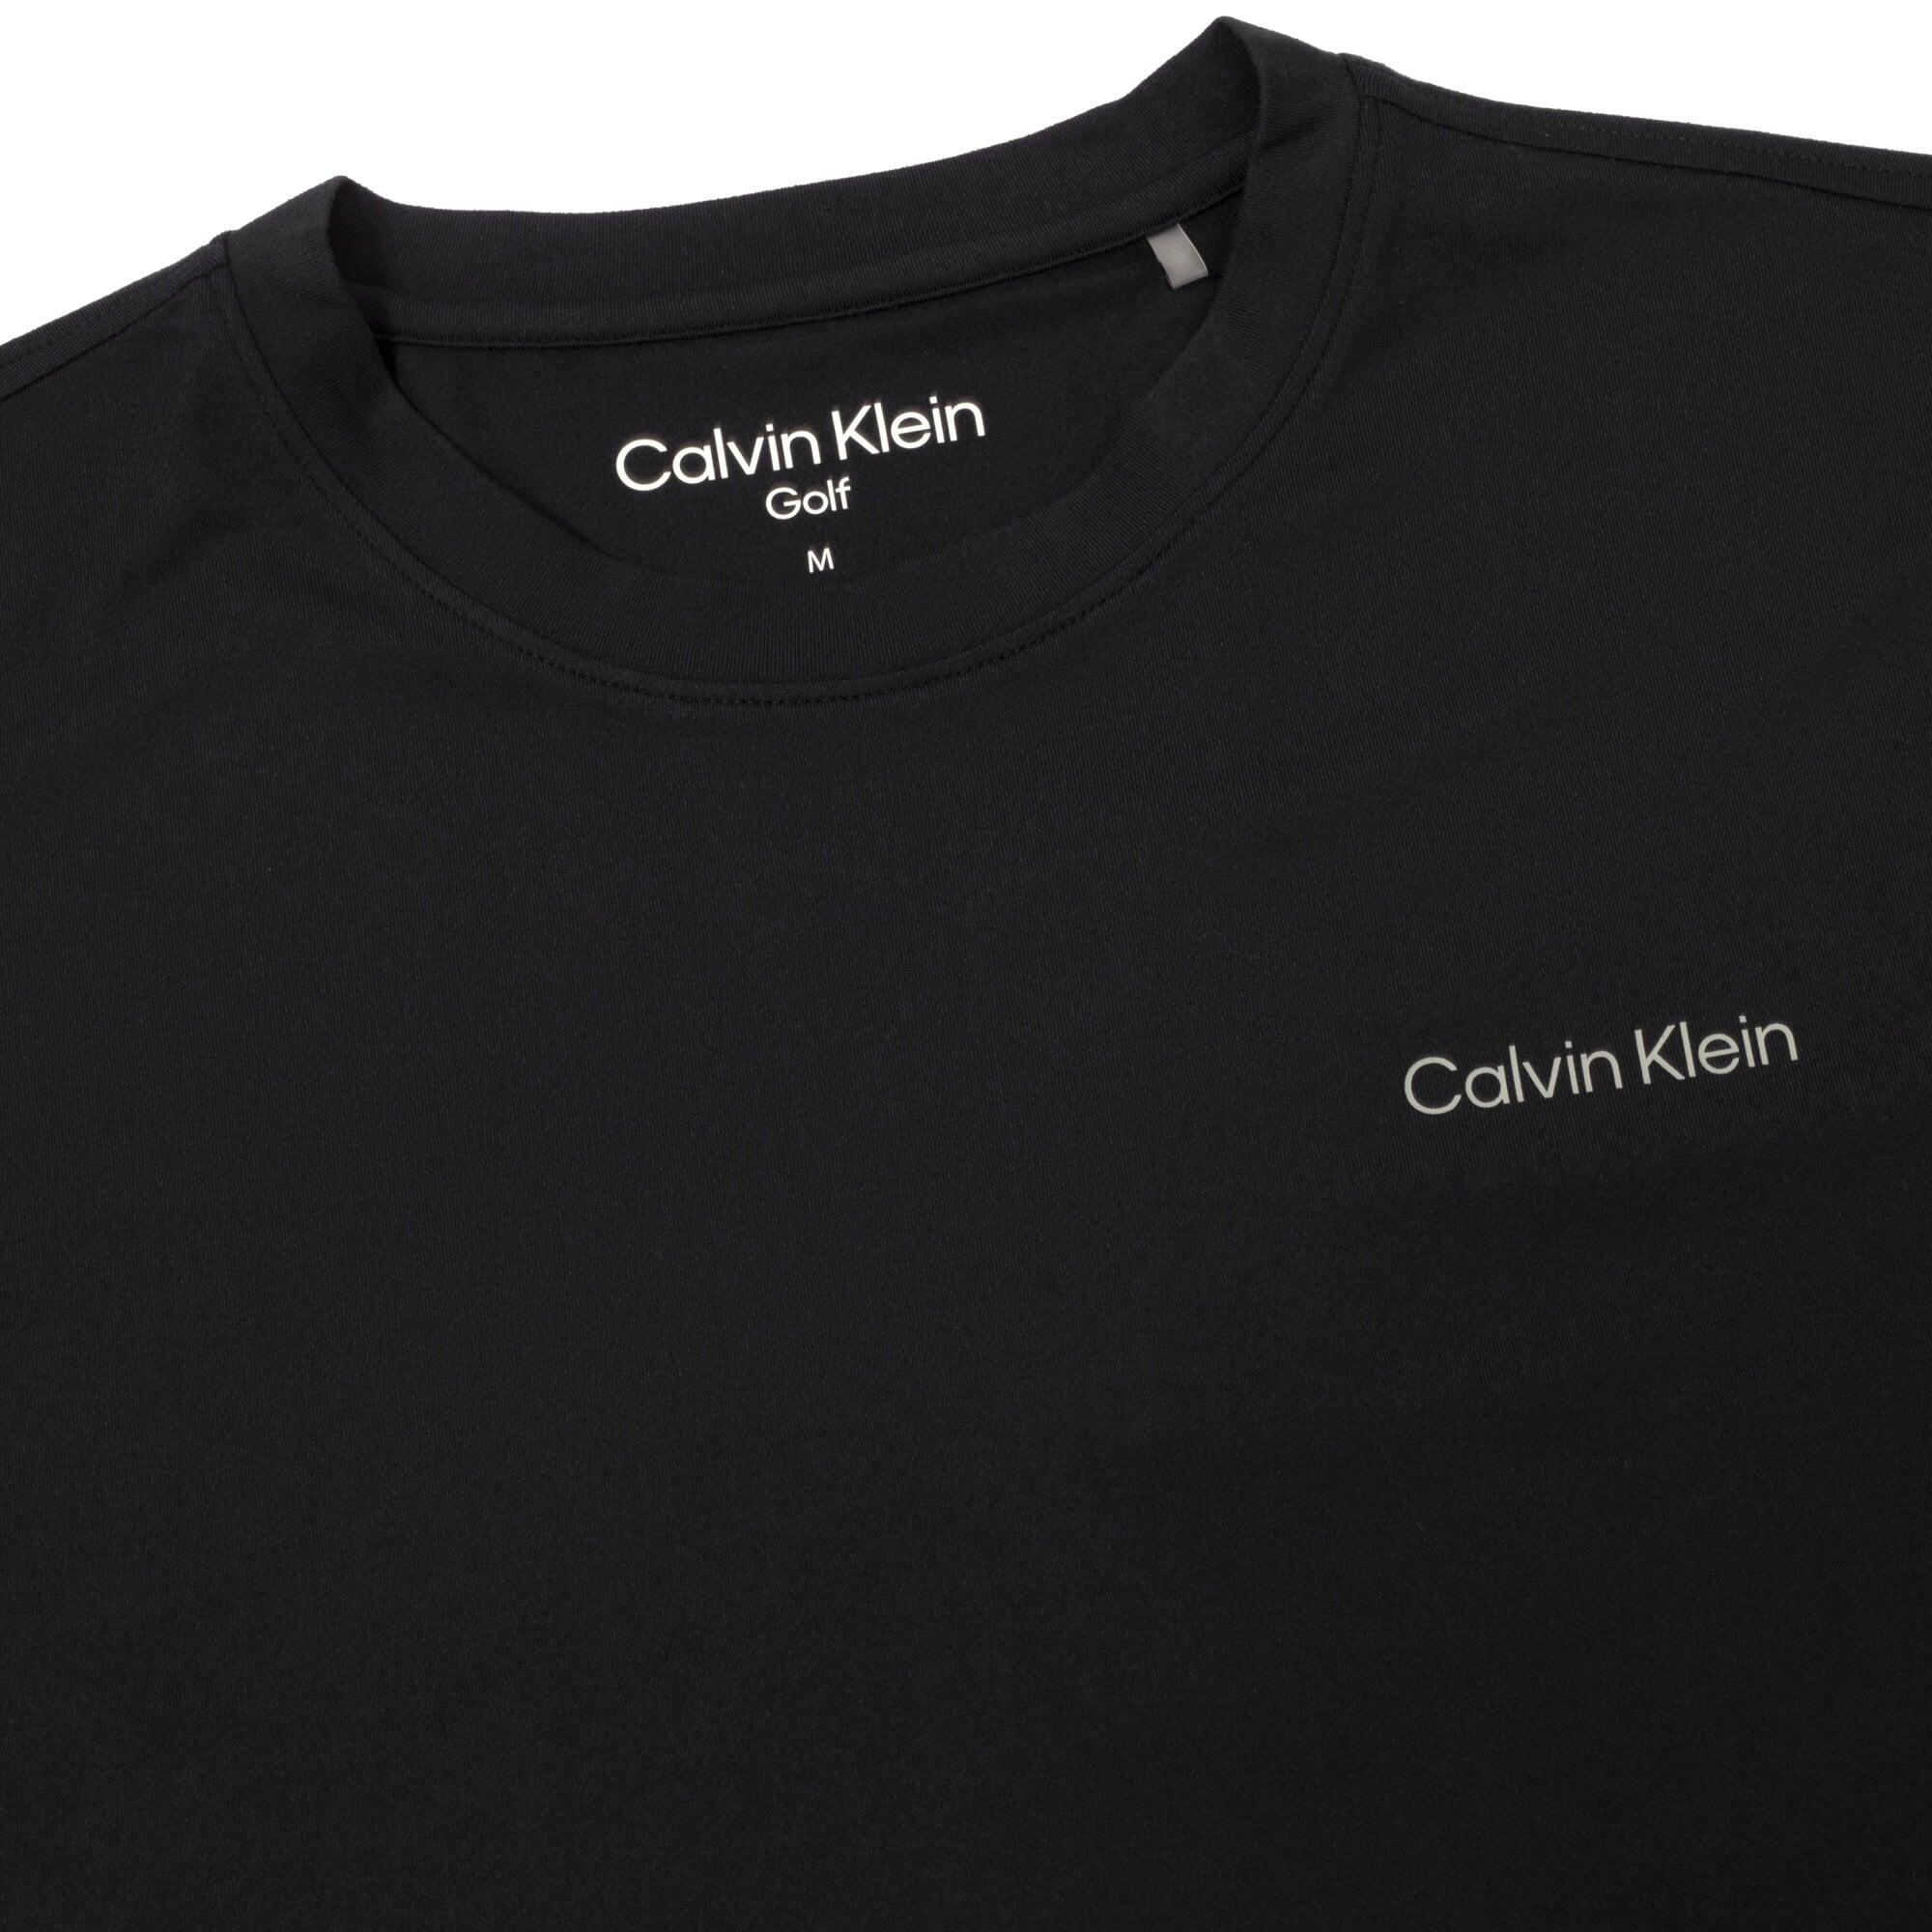 Calvin Klein NEWPORT T-SHIRT BLACK 3/6